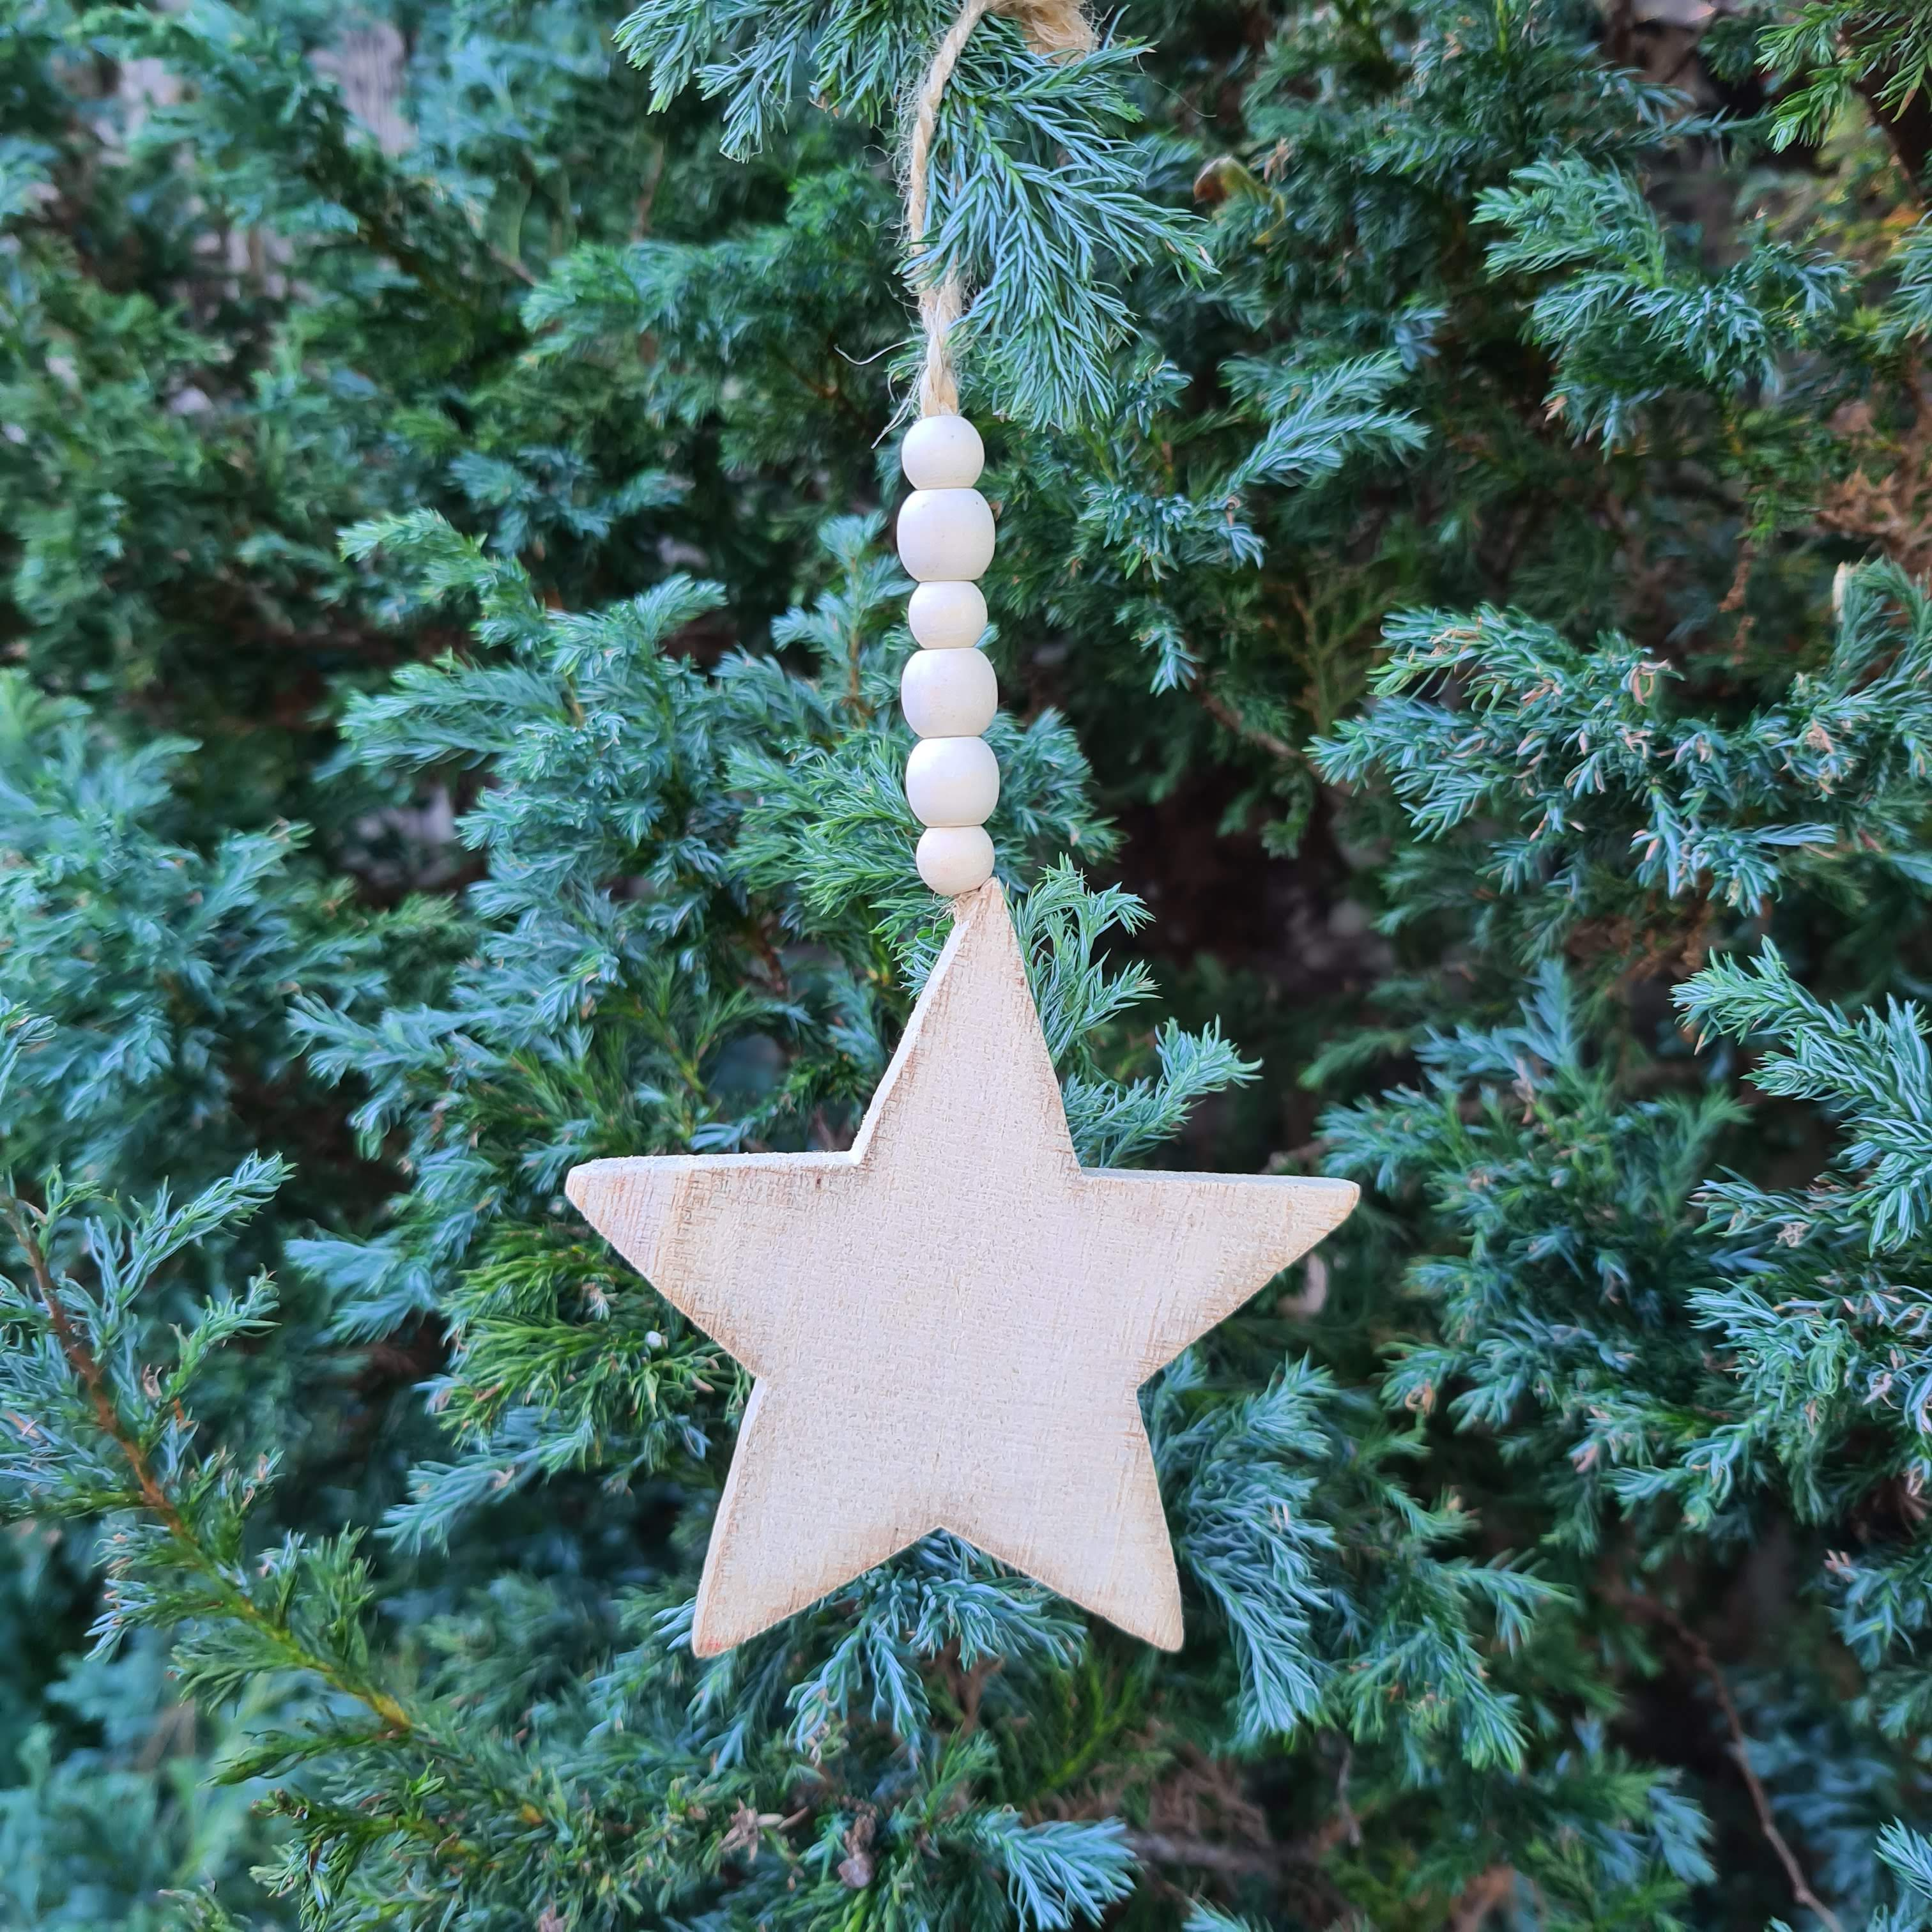 Set of 3 Natural Wood Christmas Tree Ornaments